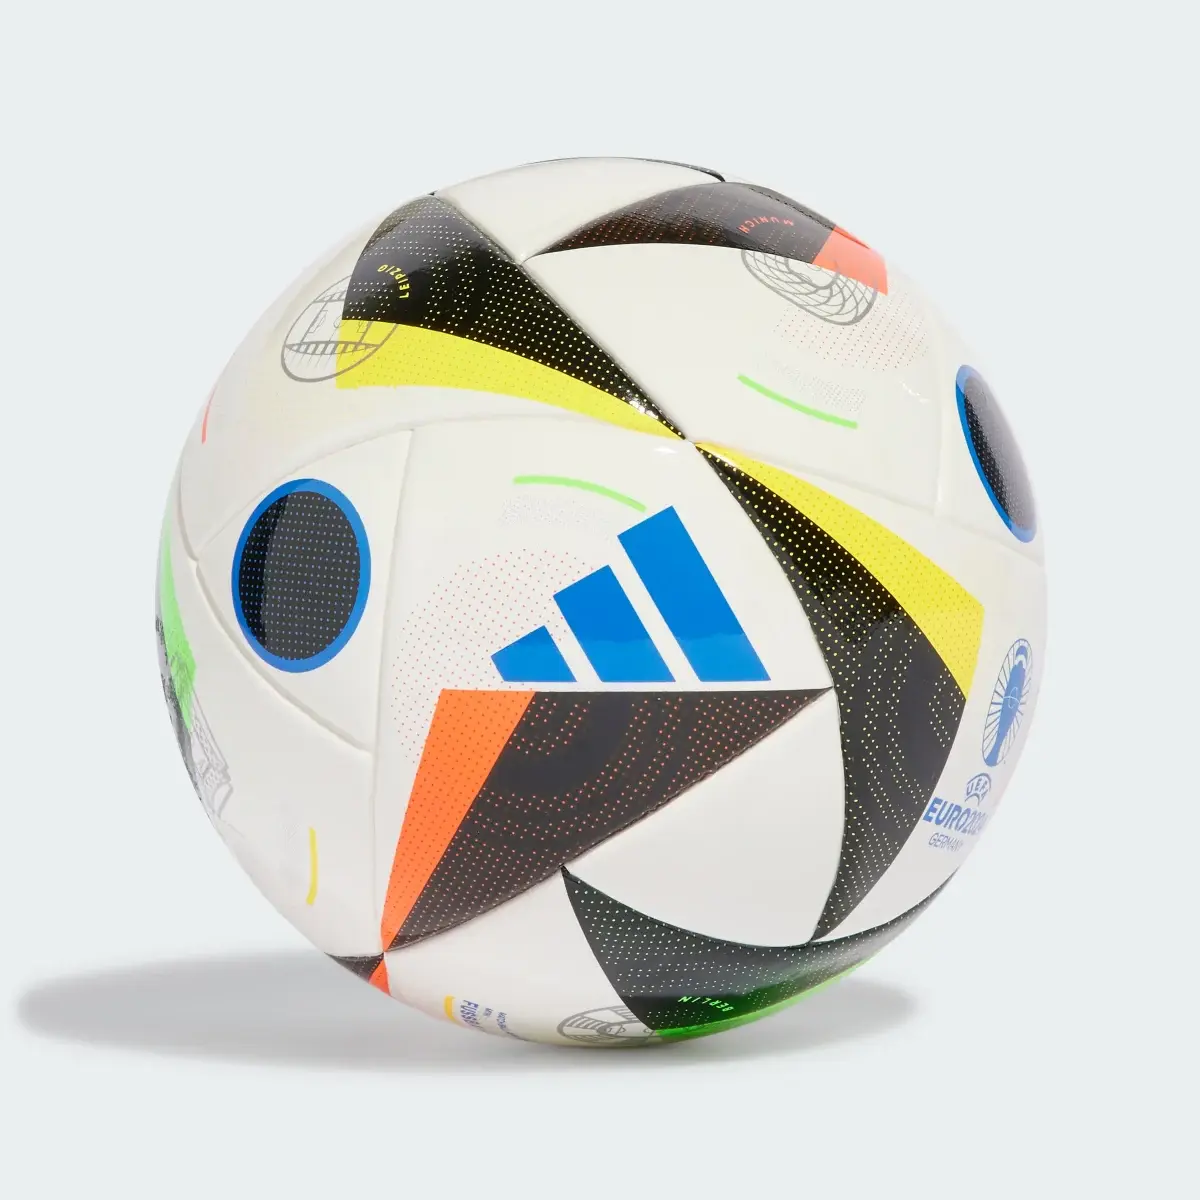 Adidas Fussballliebe Mini Ball. 3